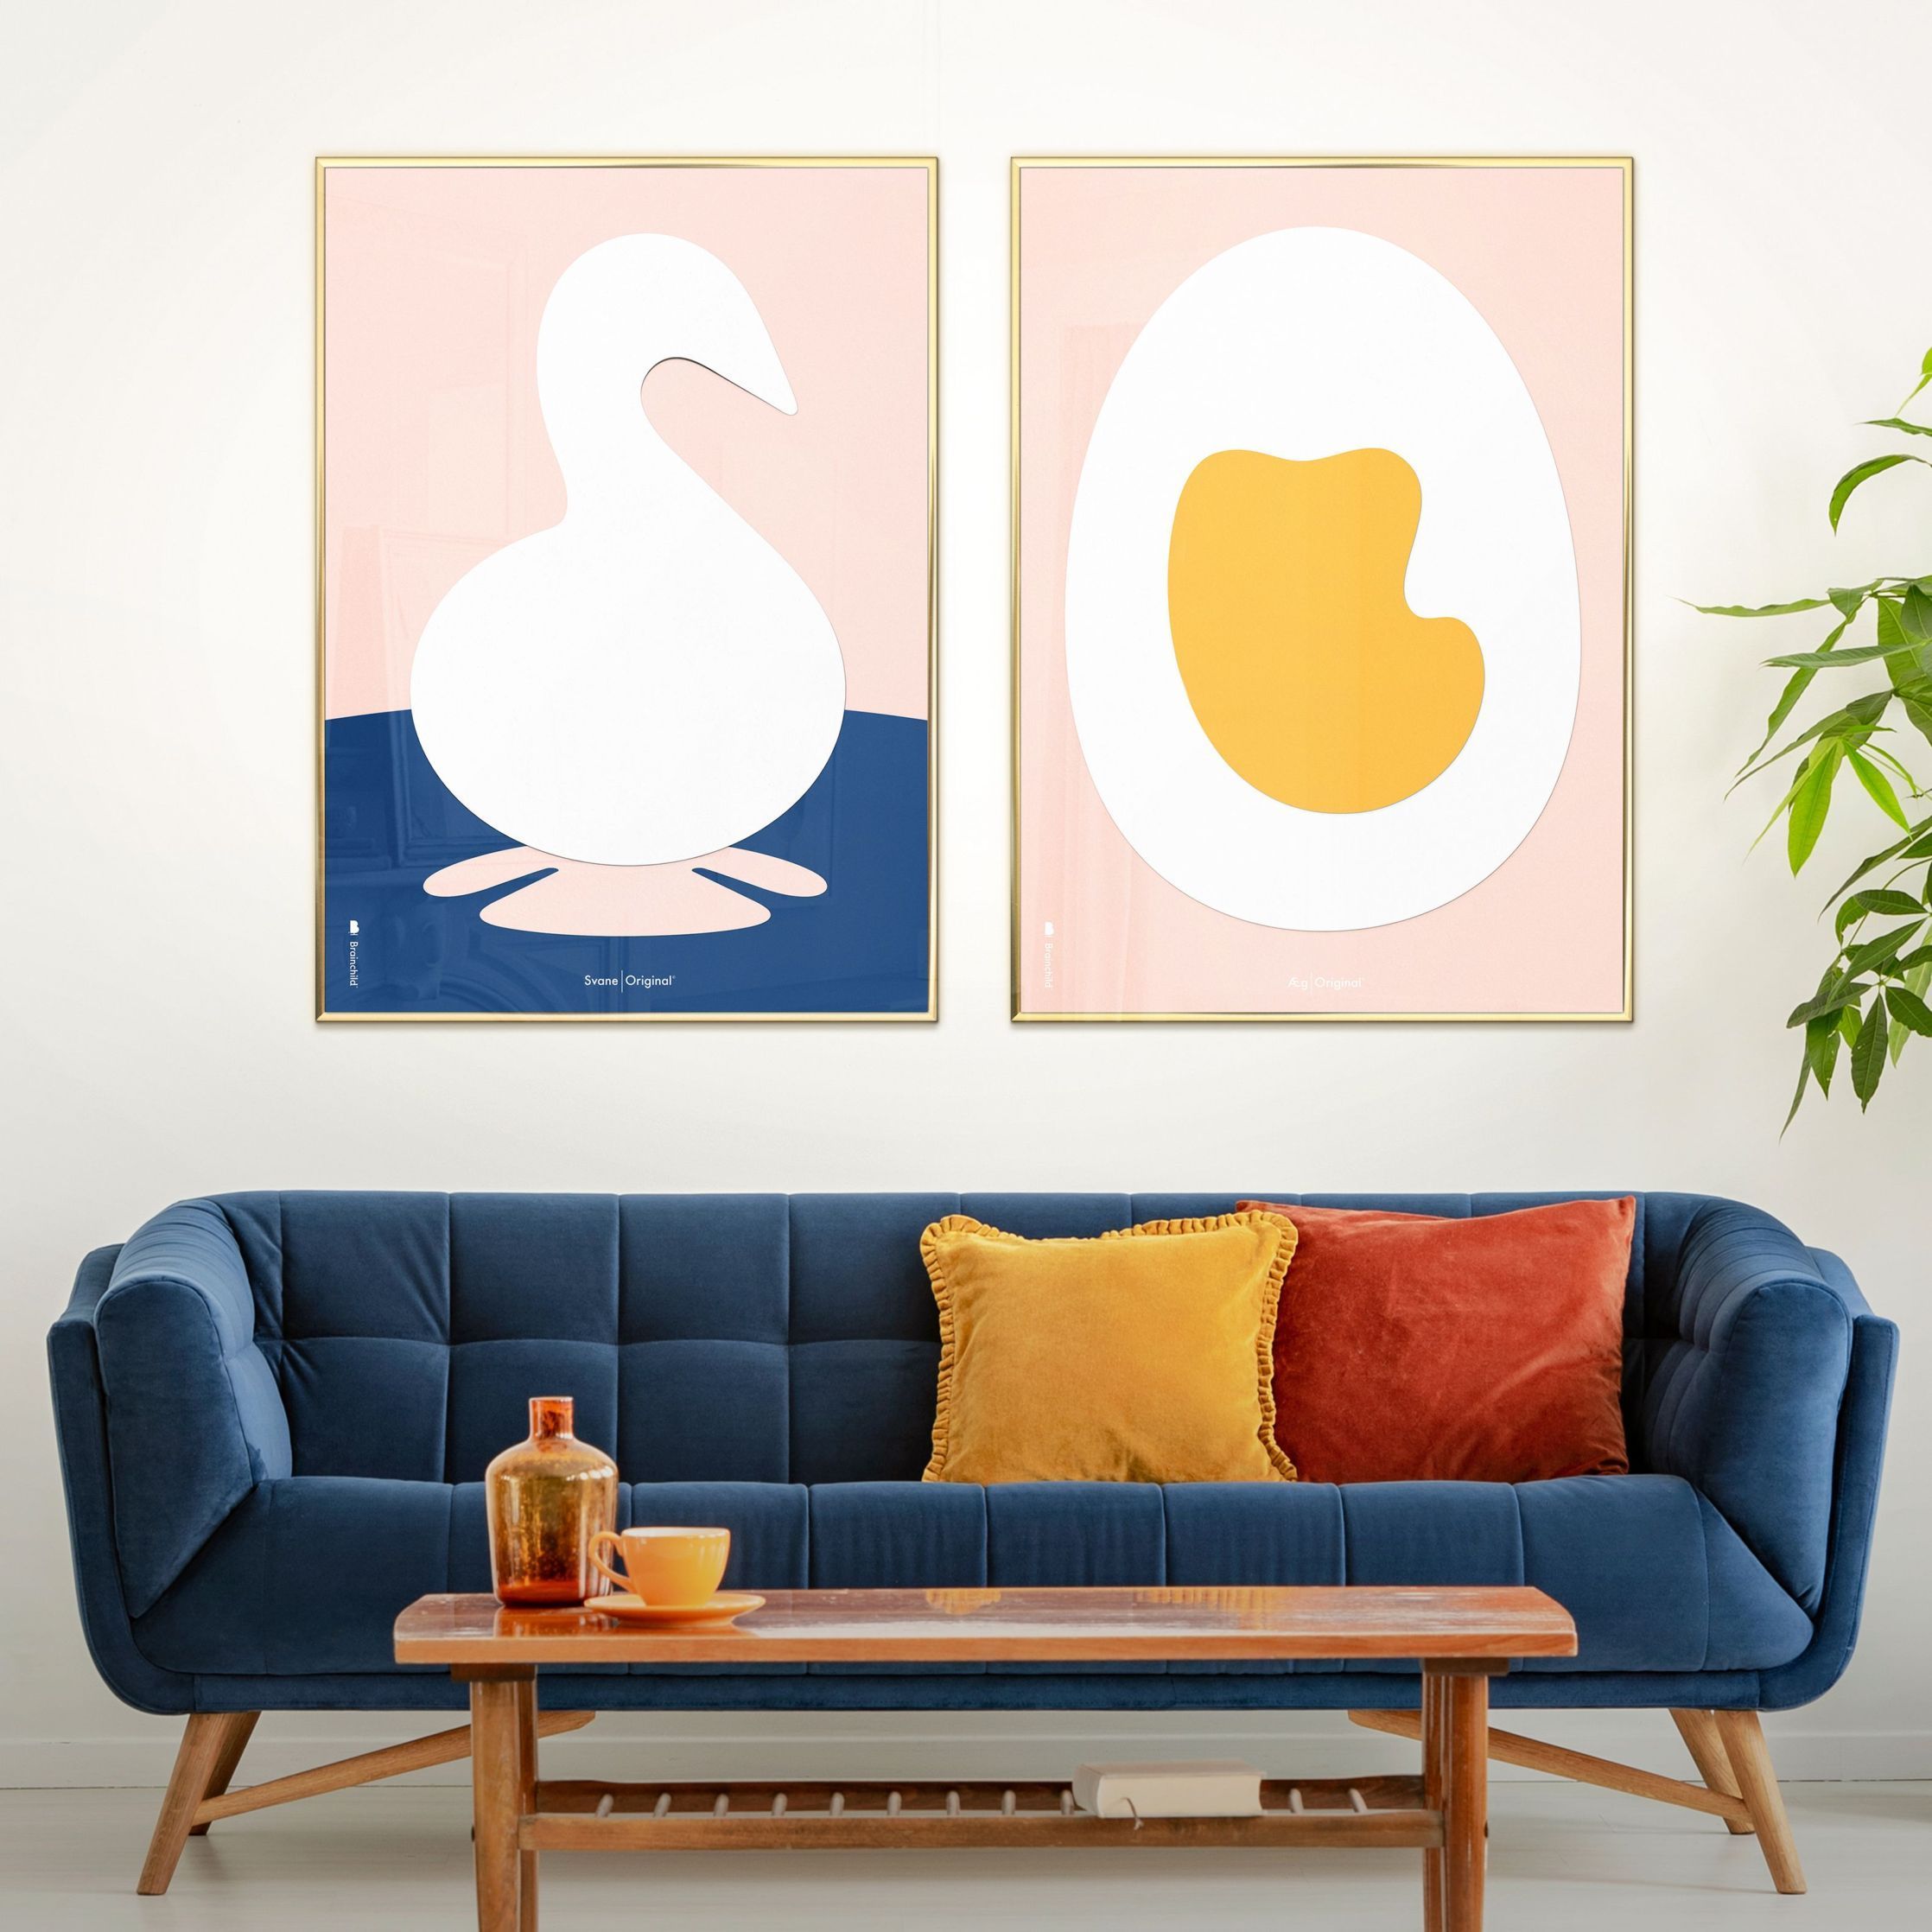 Brainchild Swan Paper Clip Poster zonder frame A5, roze achtergrond